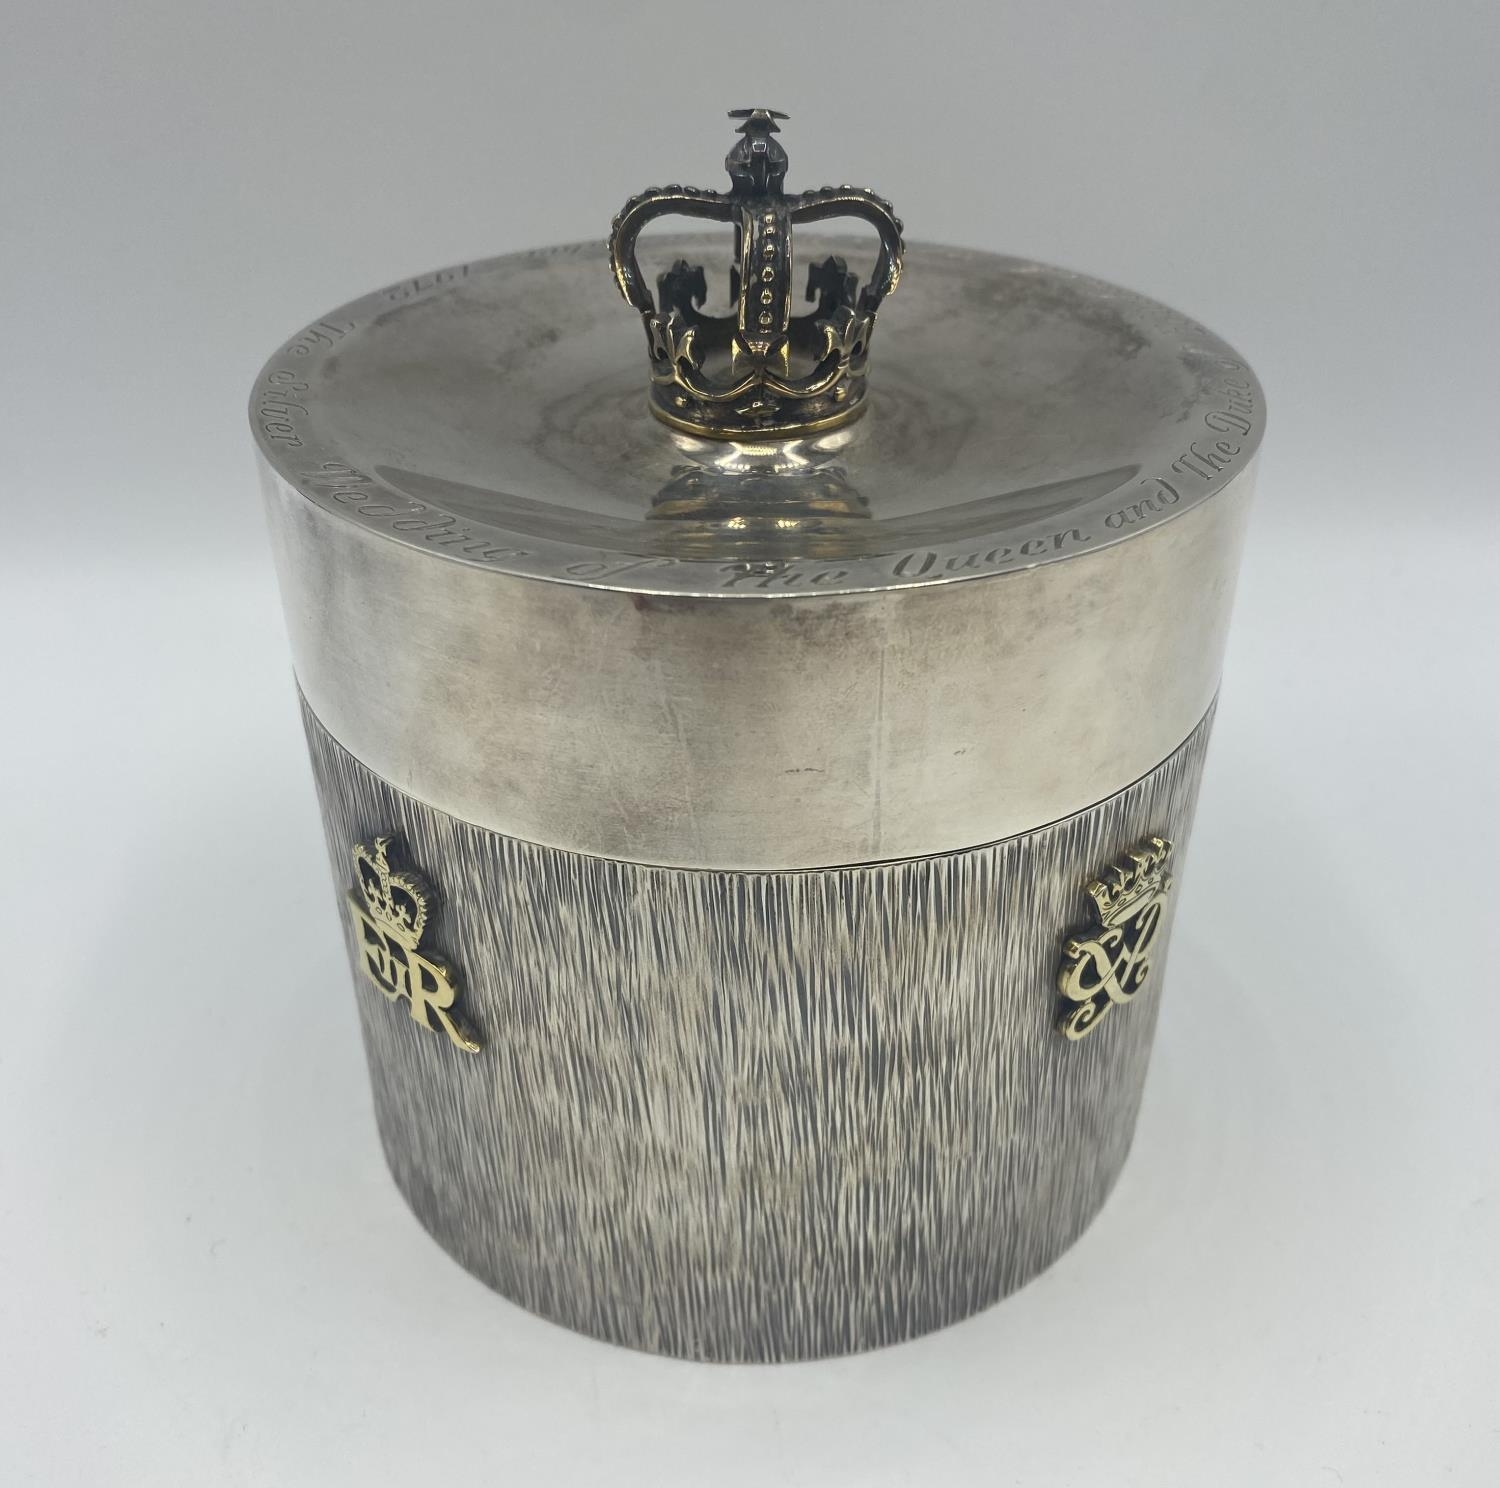 A sterling silver commemorative H M Queen Elizabeth Silver Wedding Anniversary tea caddy by